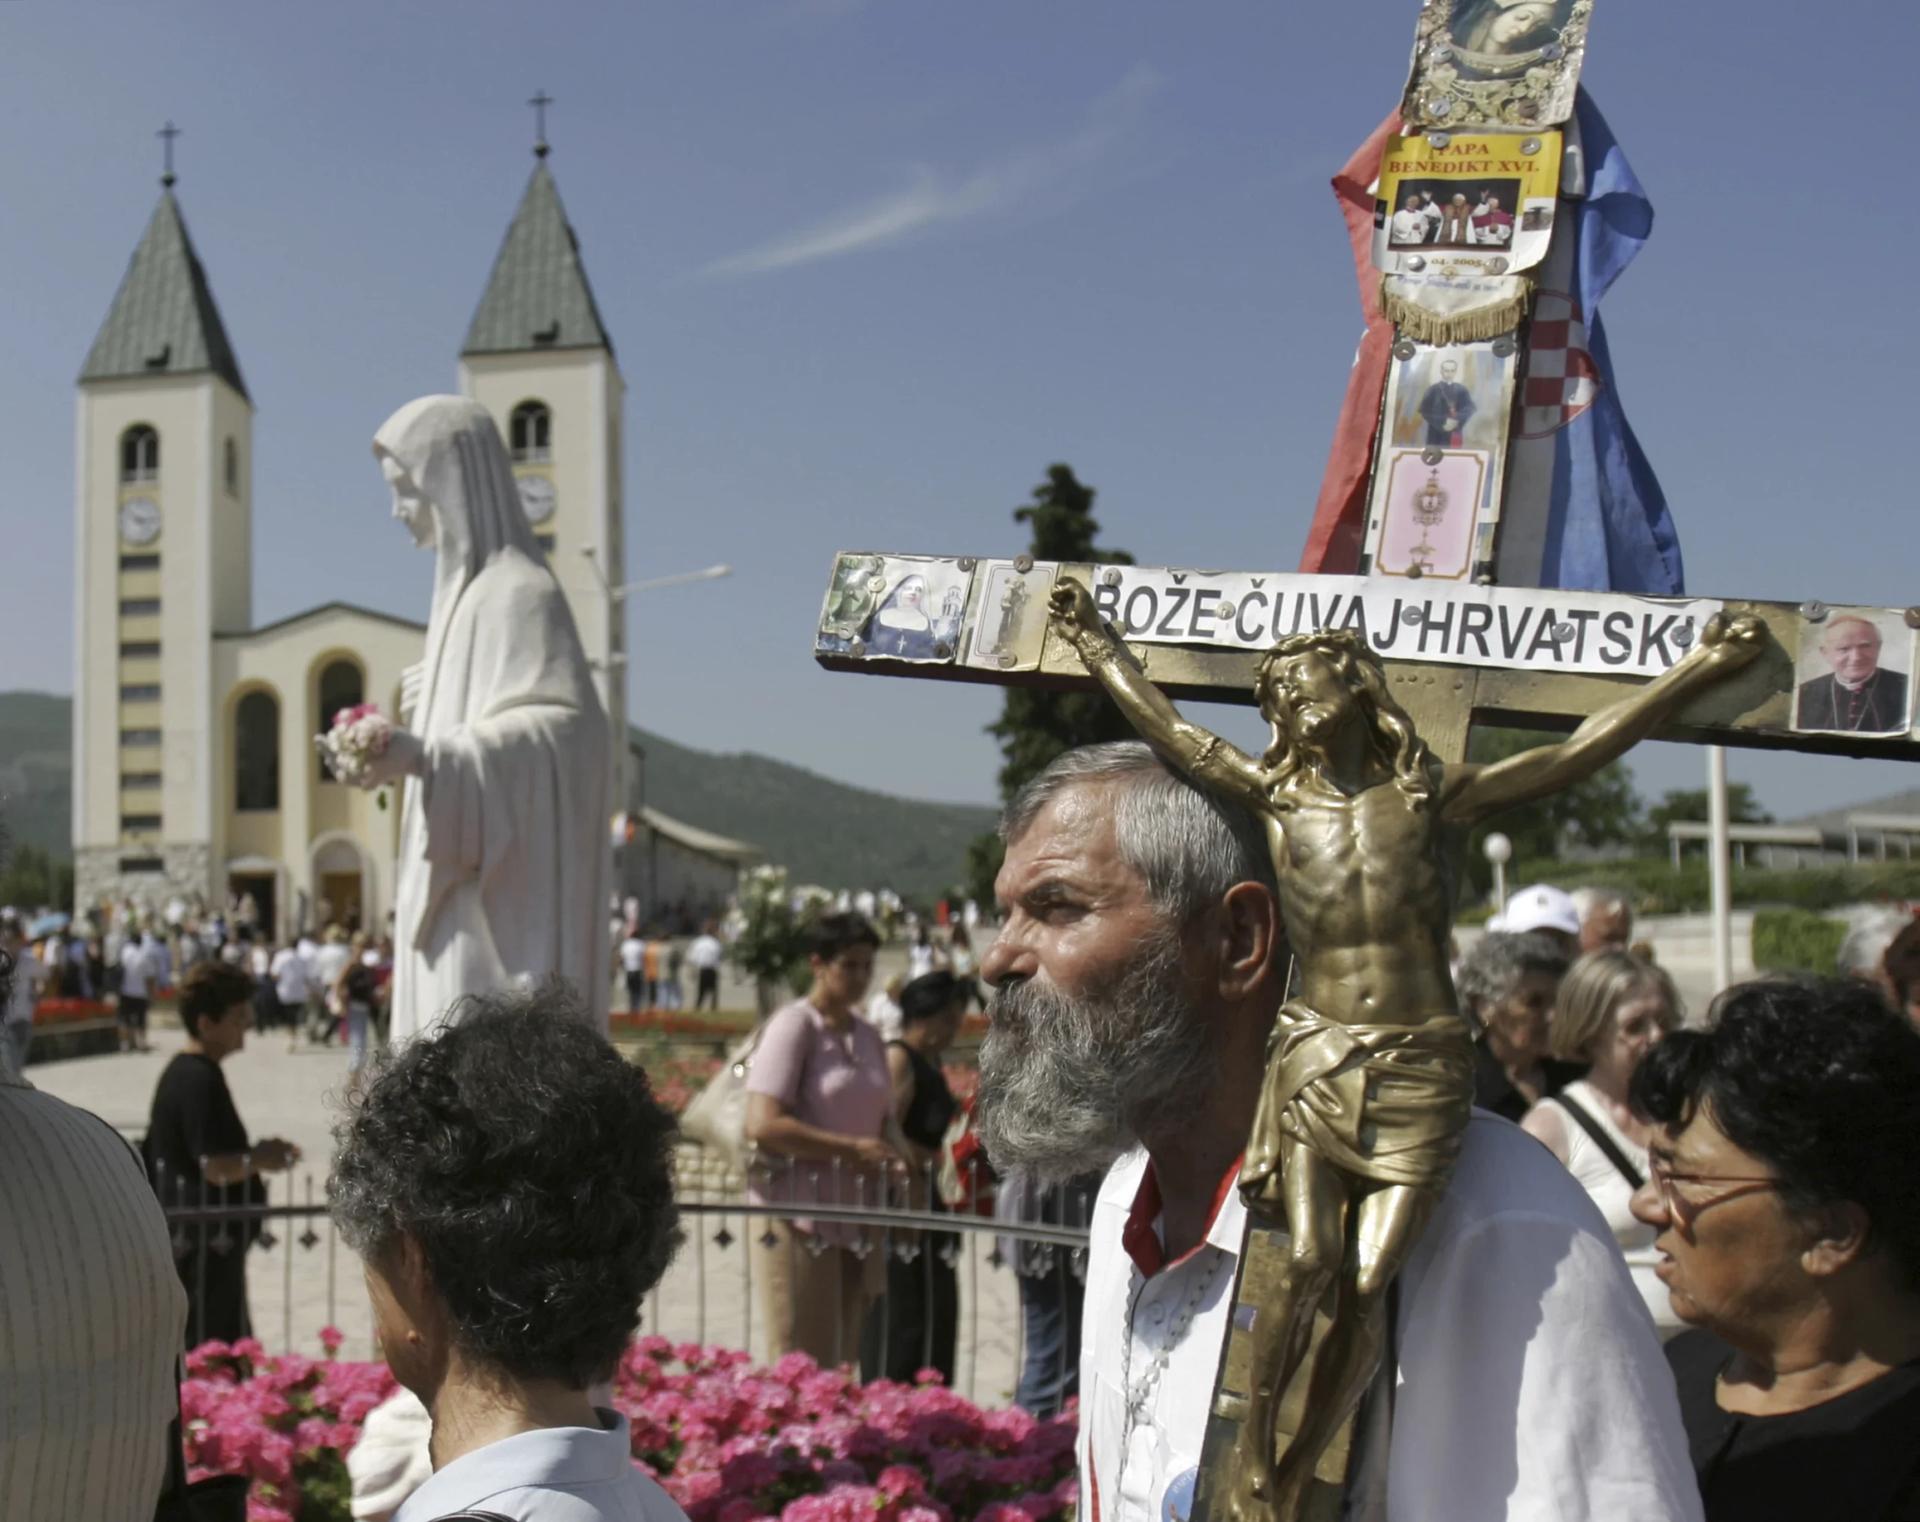 In new vetting process for apparitions, Vatican nixes ‘supernatural’ label